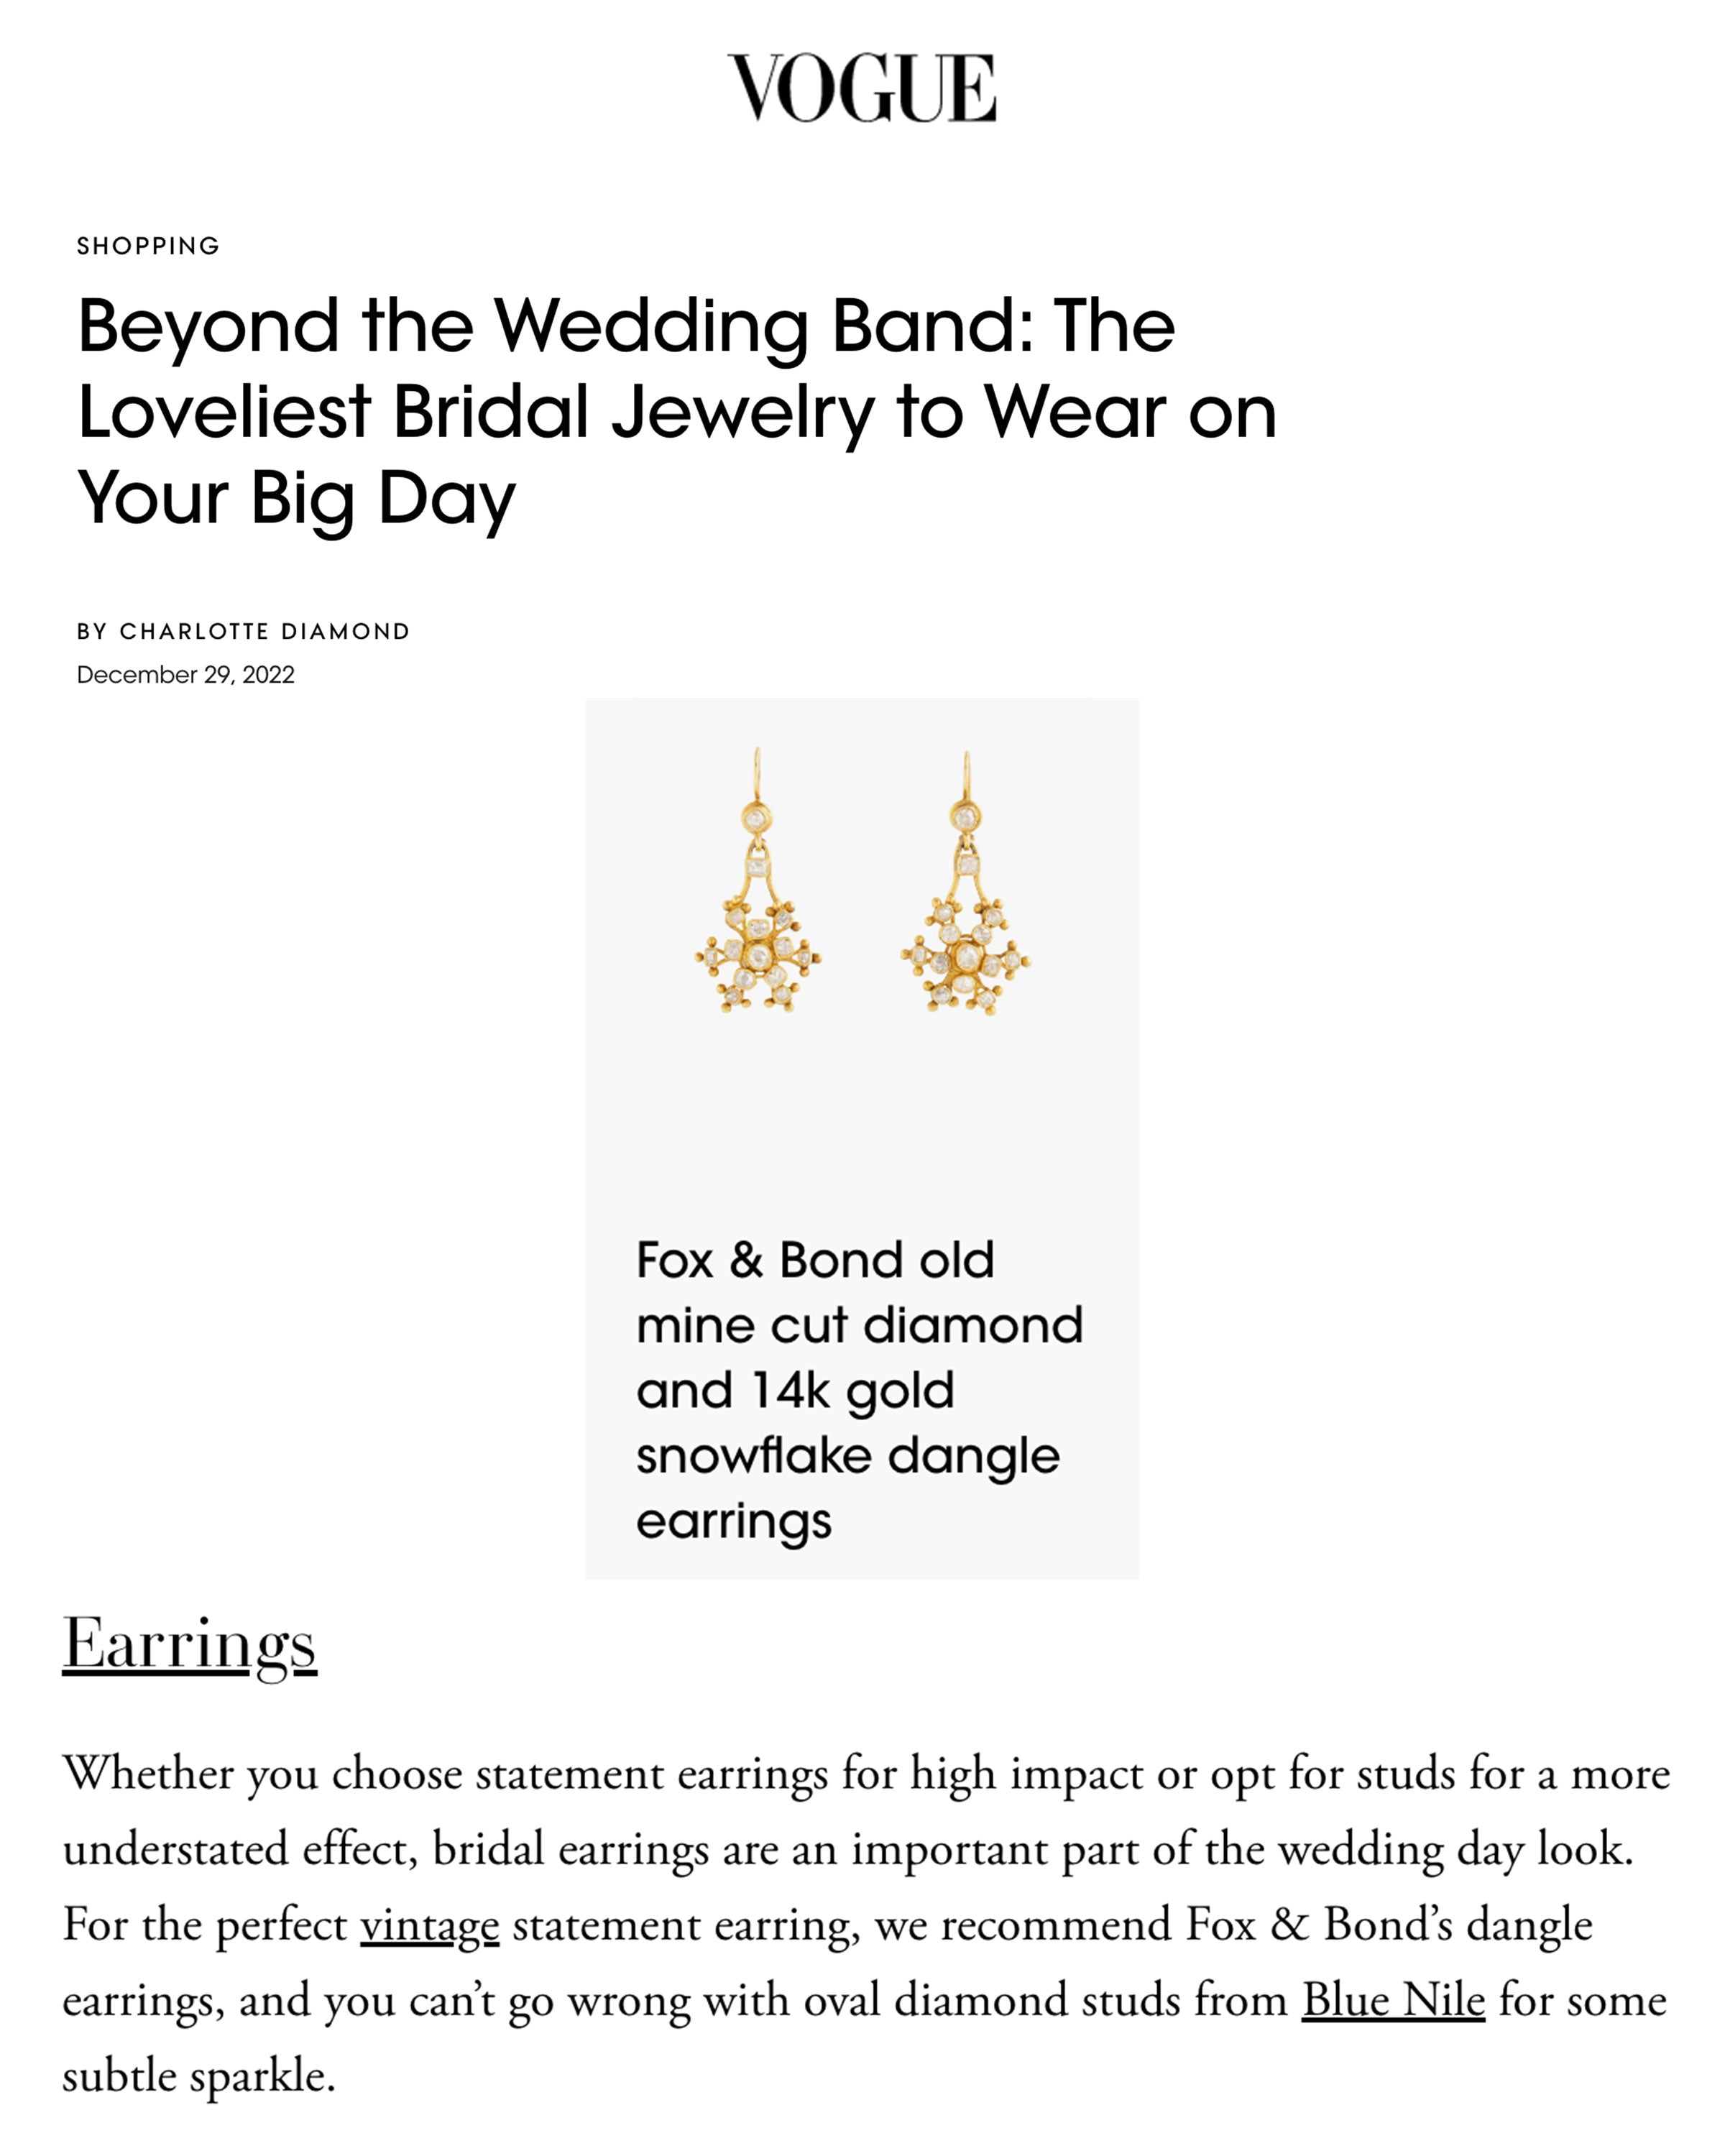 VOGUE: Beyond the Wedding Band